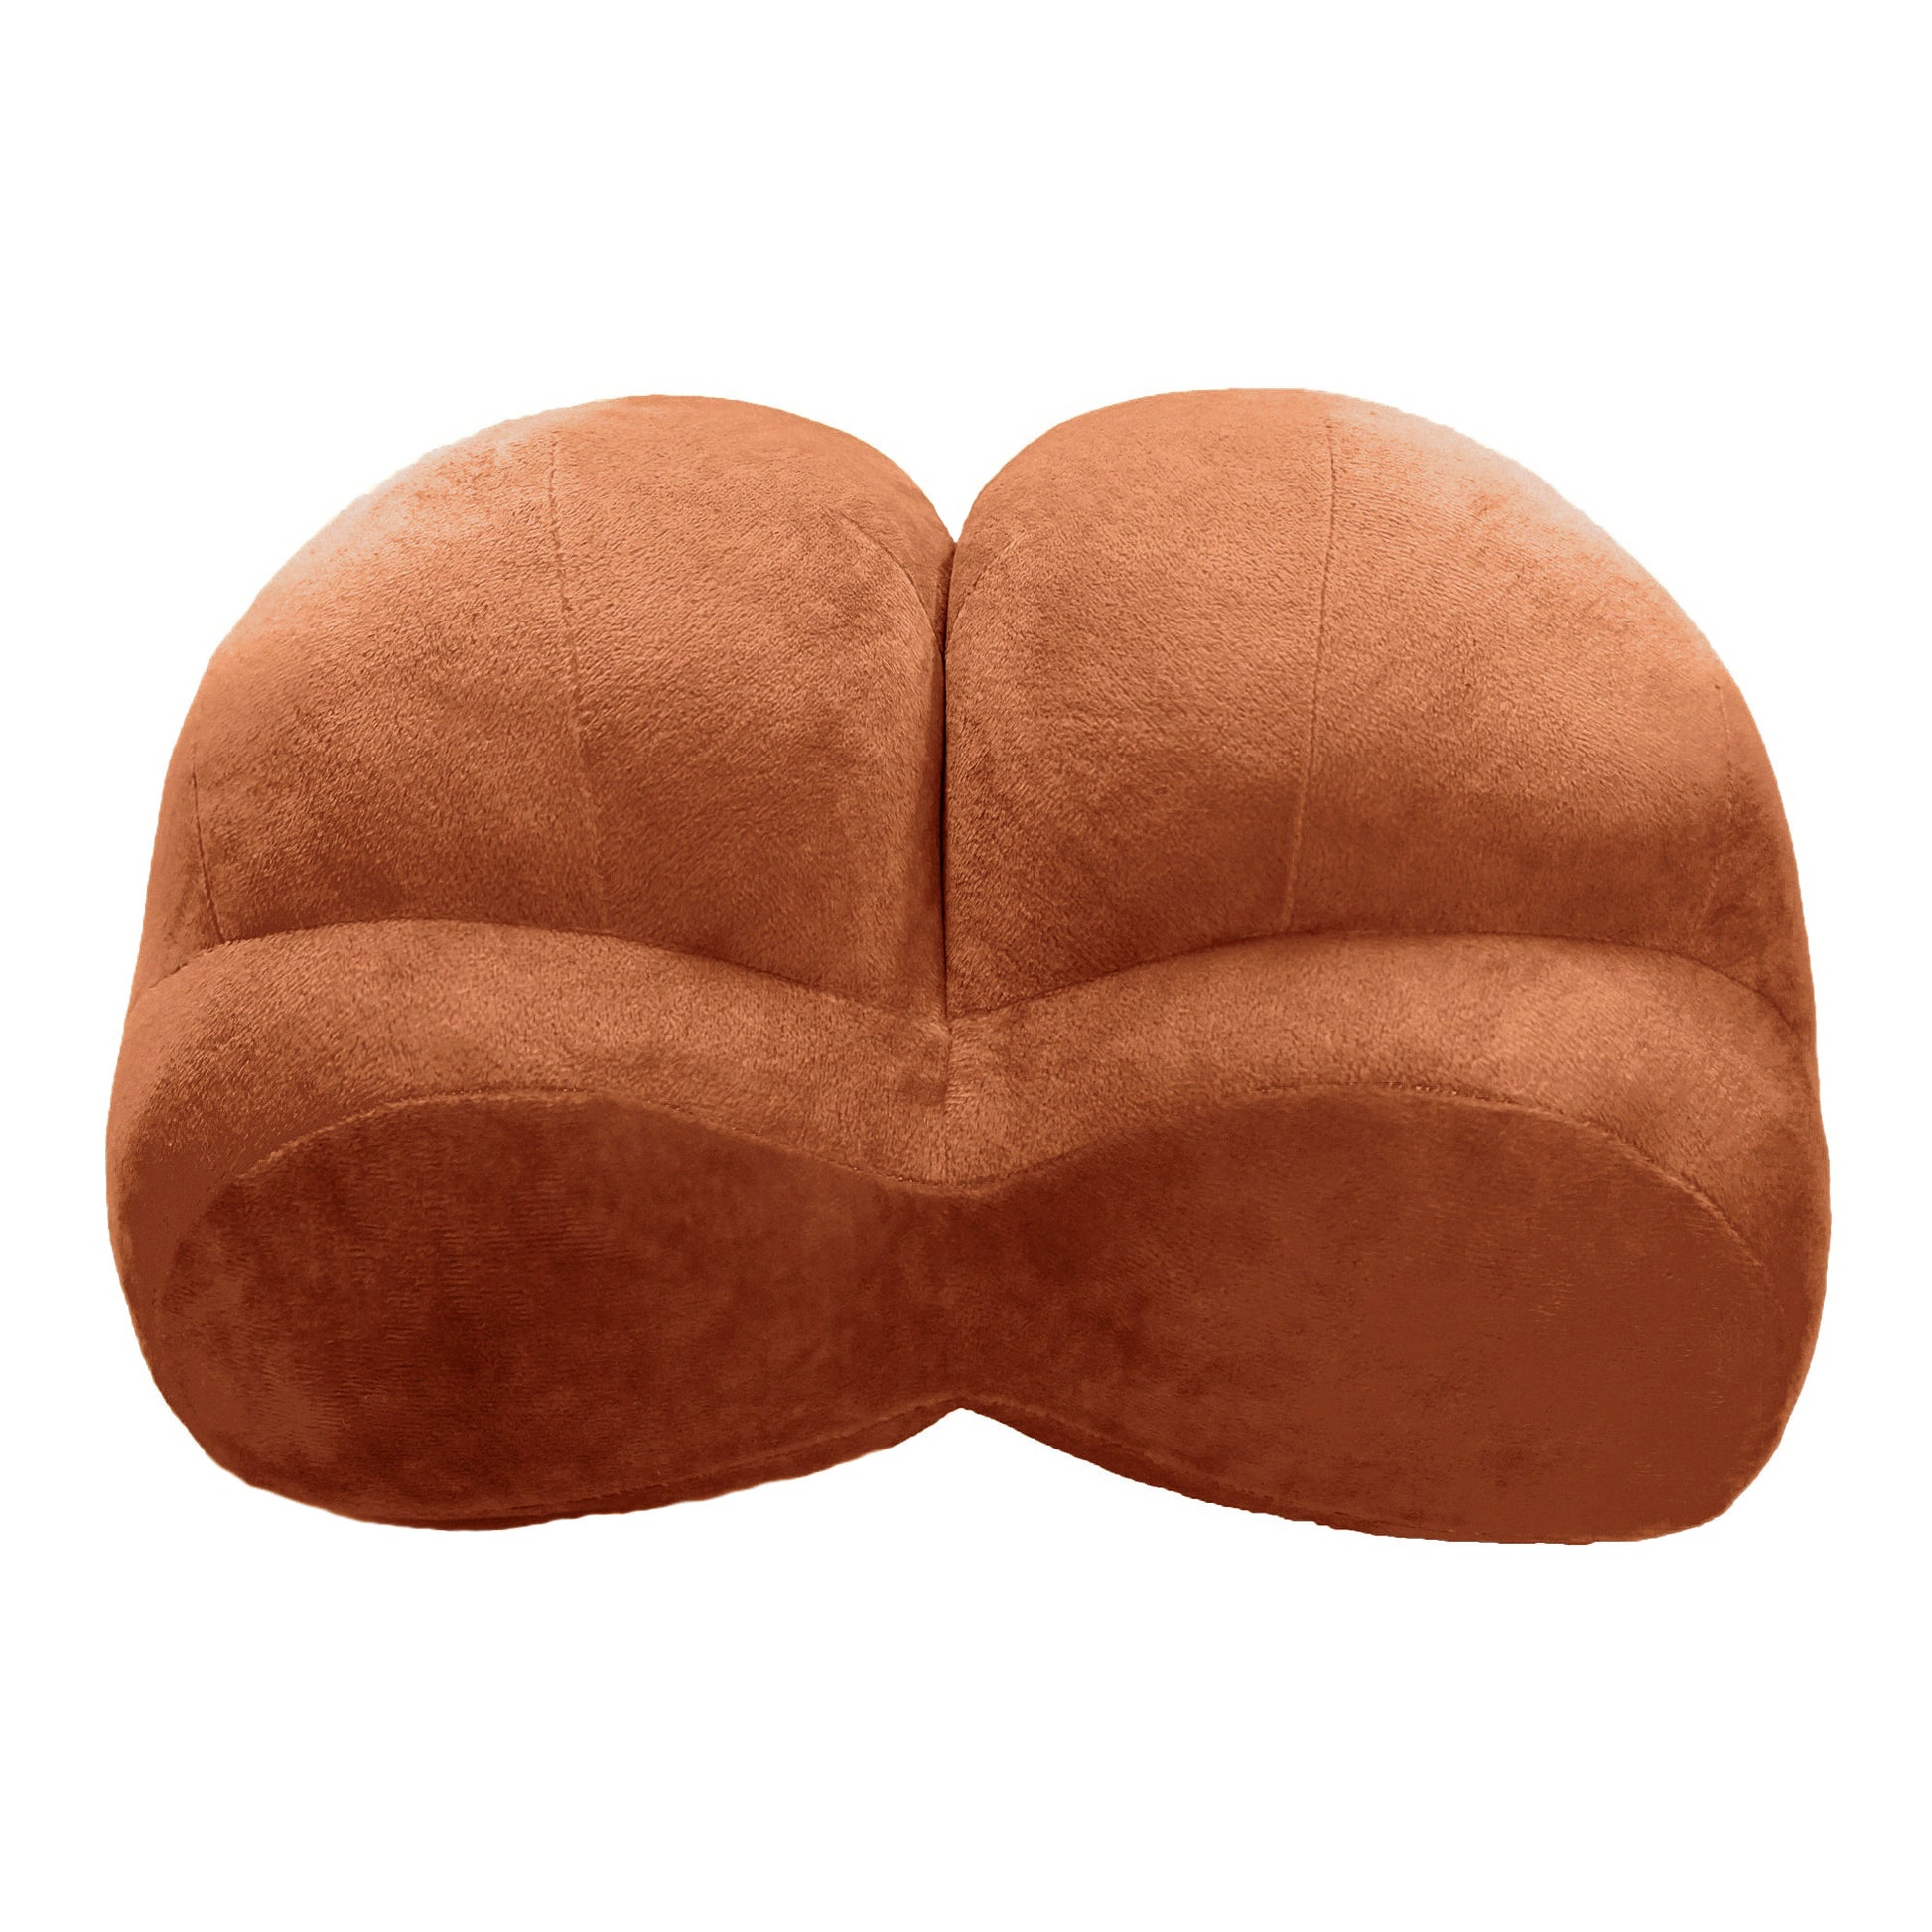 The Original Pillow Booty-Cinnamon – LovelyNicocoa